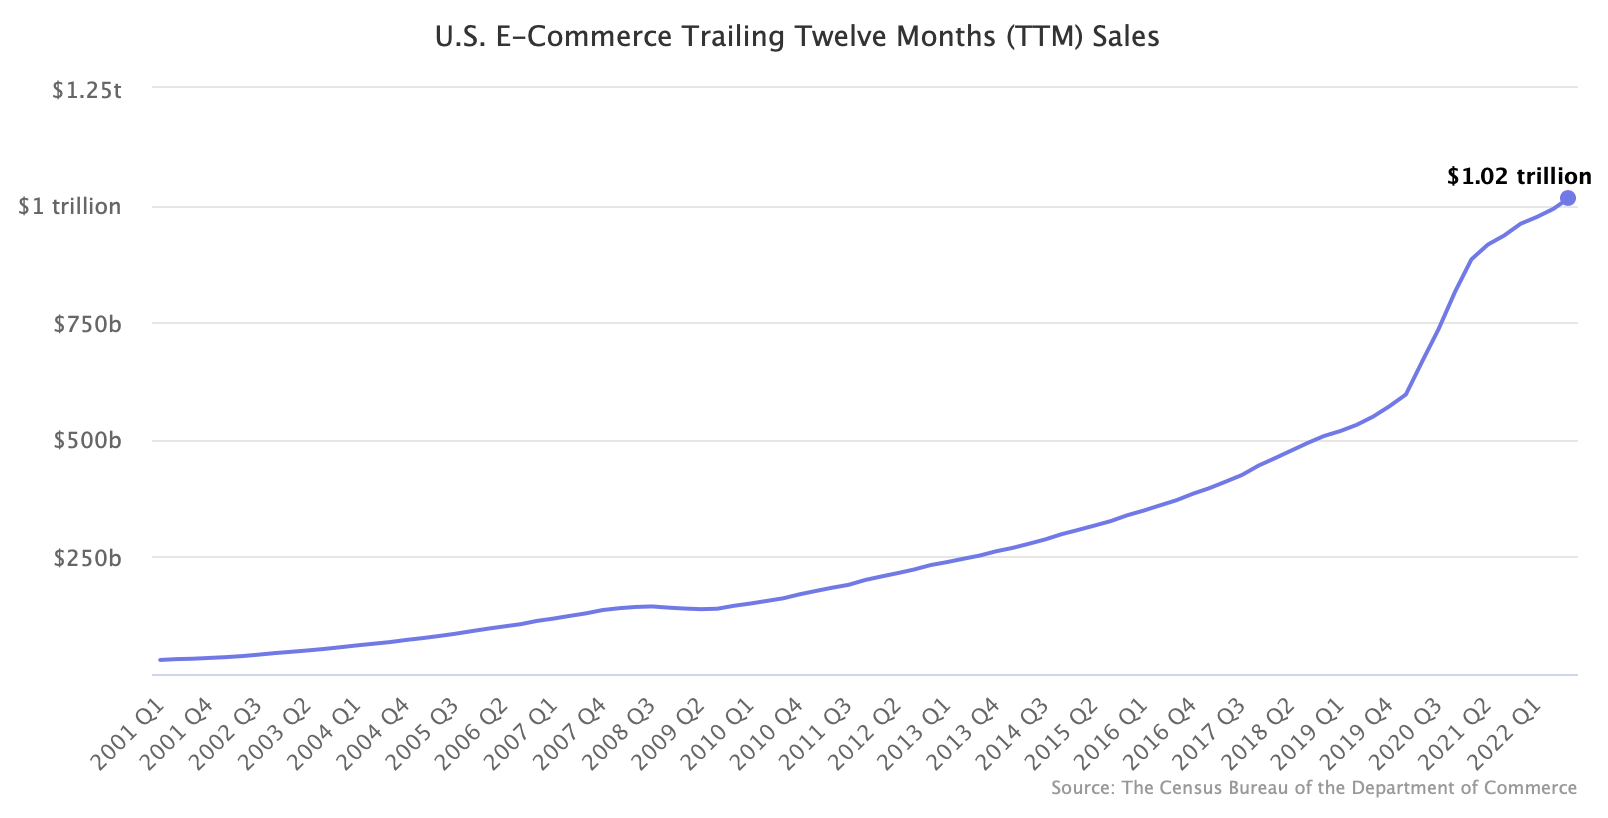 U.S. E-Commerce Trailing Twelve Months (TTM) Sales